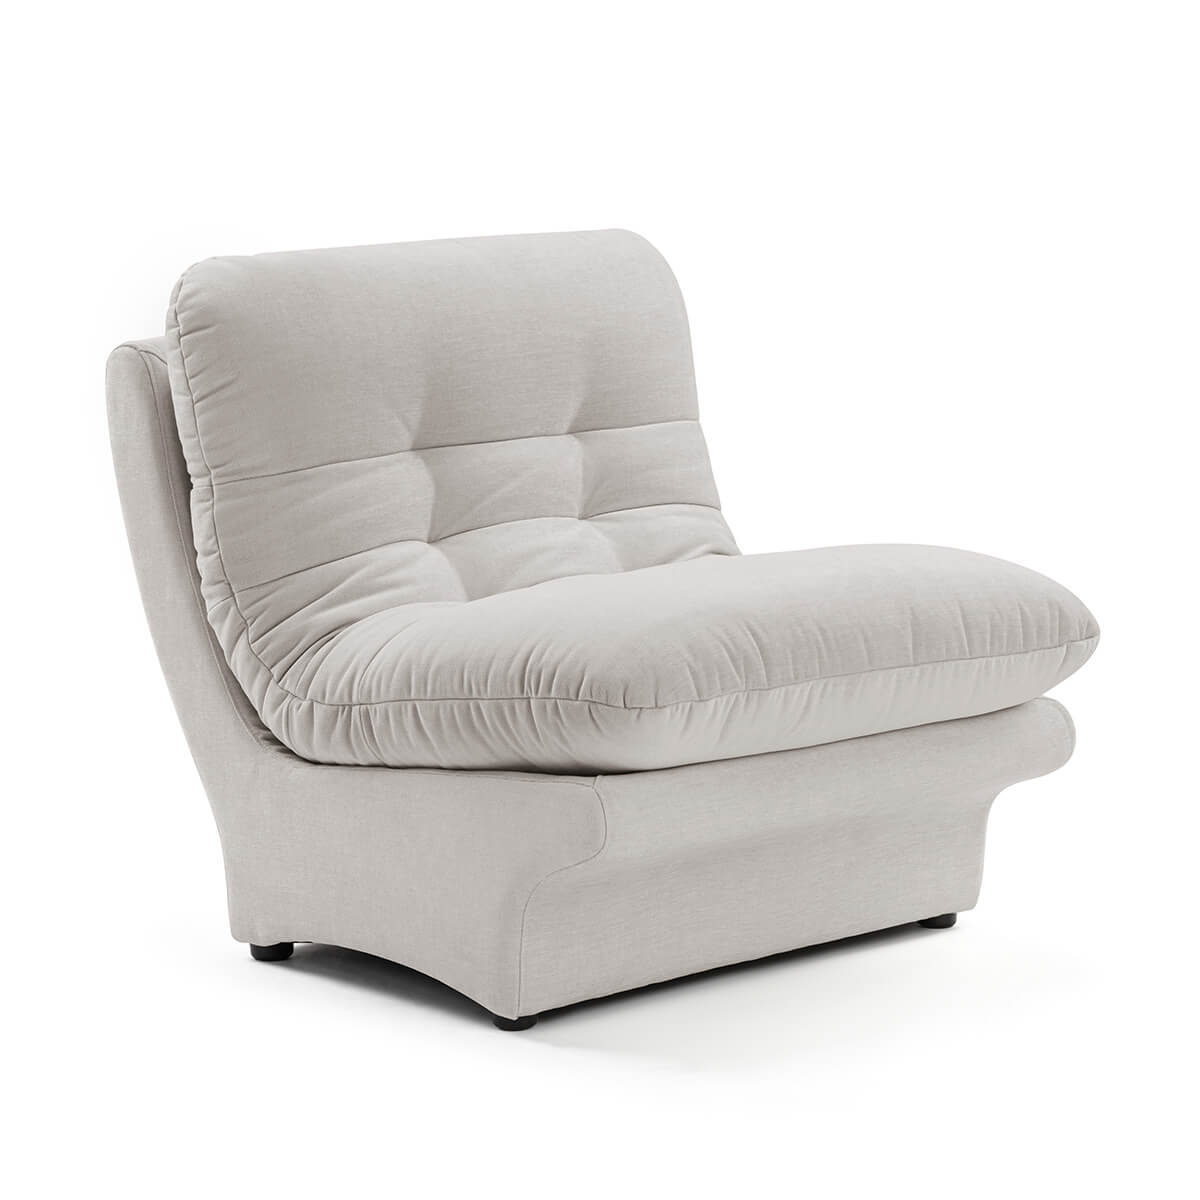 Carsons Mid Century Curved Modular Sectional Sofa / Middle Module Performance Felt-Light Grey